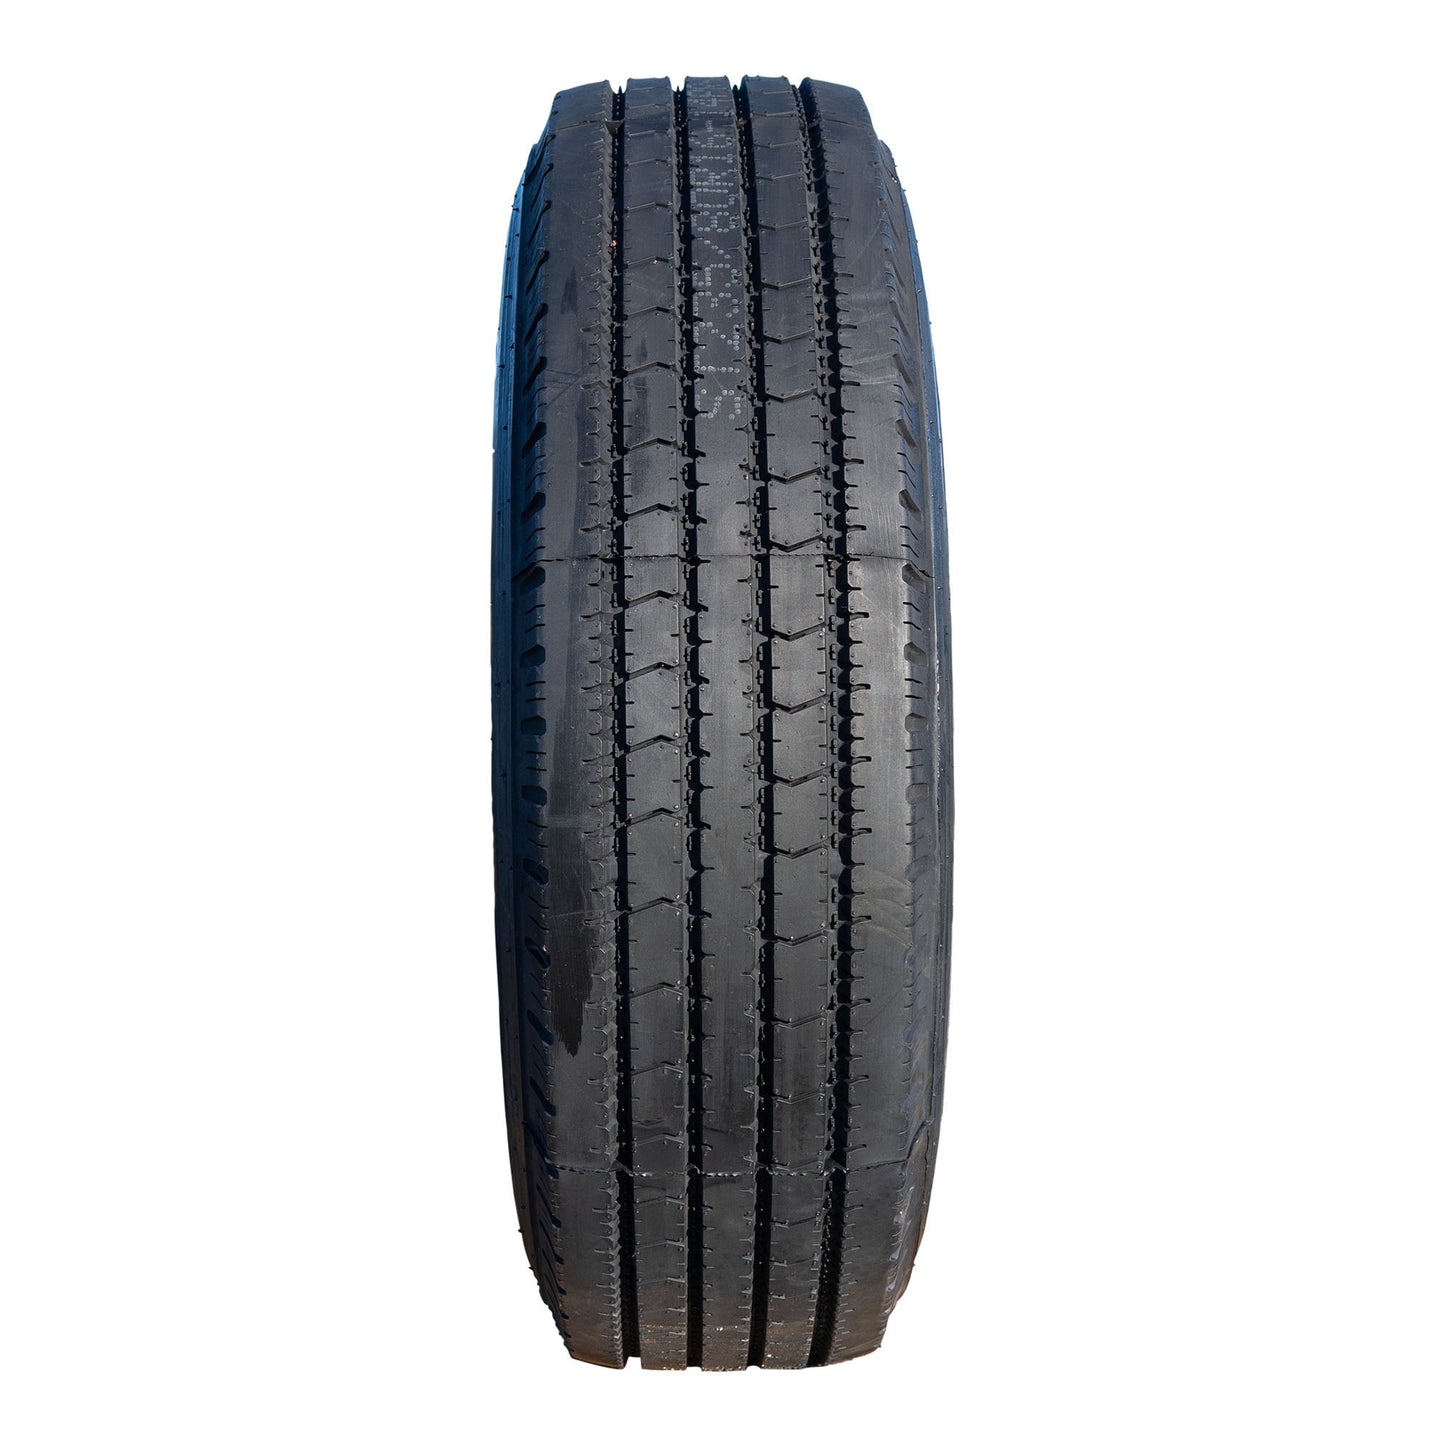 Goodride 16" 14 ply Radial Trailer Tire & Wheel - ST 235/80 R16 8 Lug (Silver Mod)